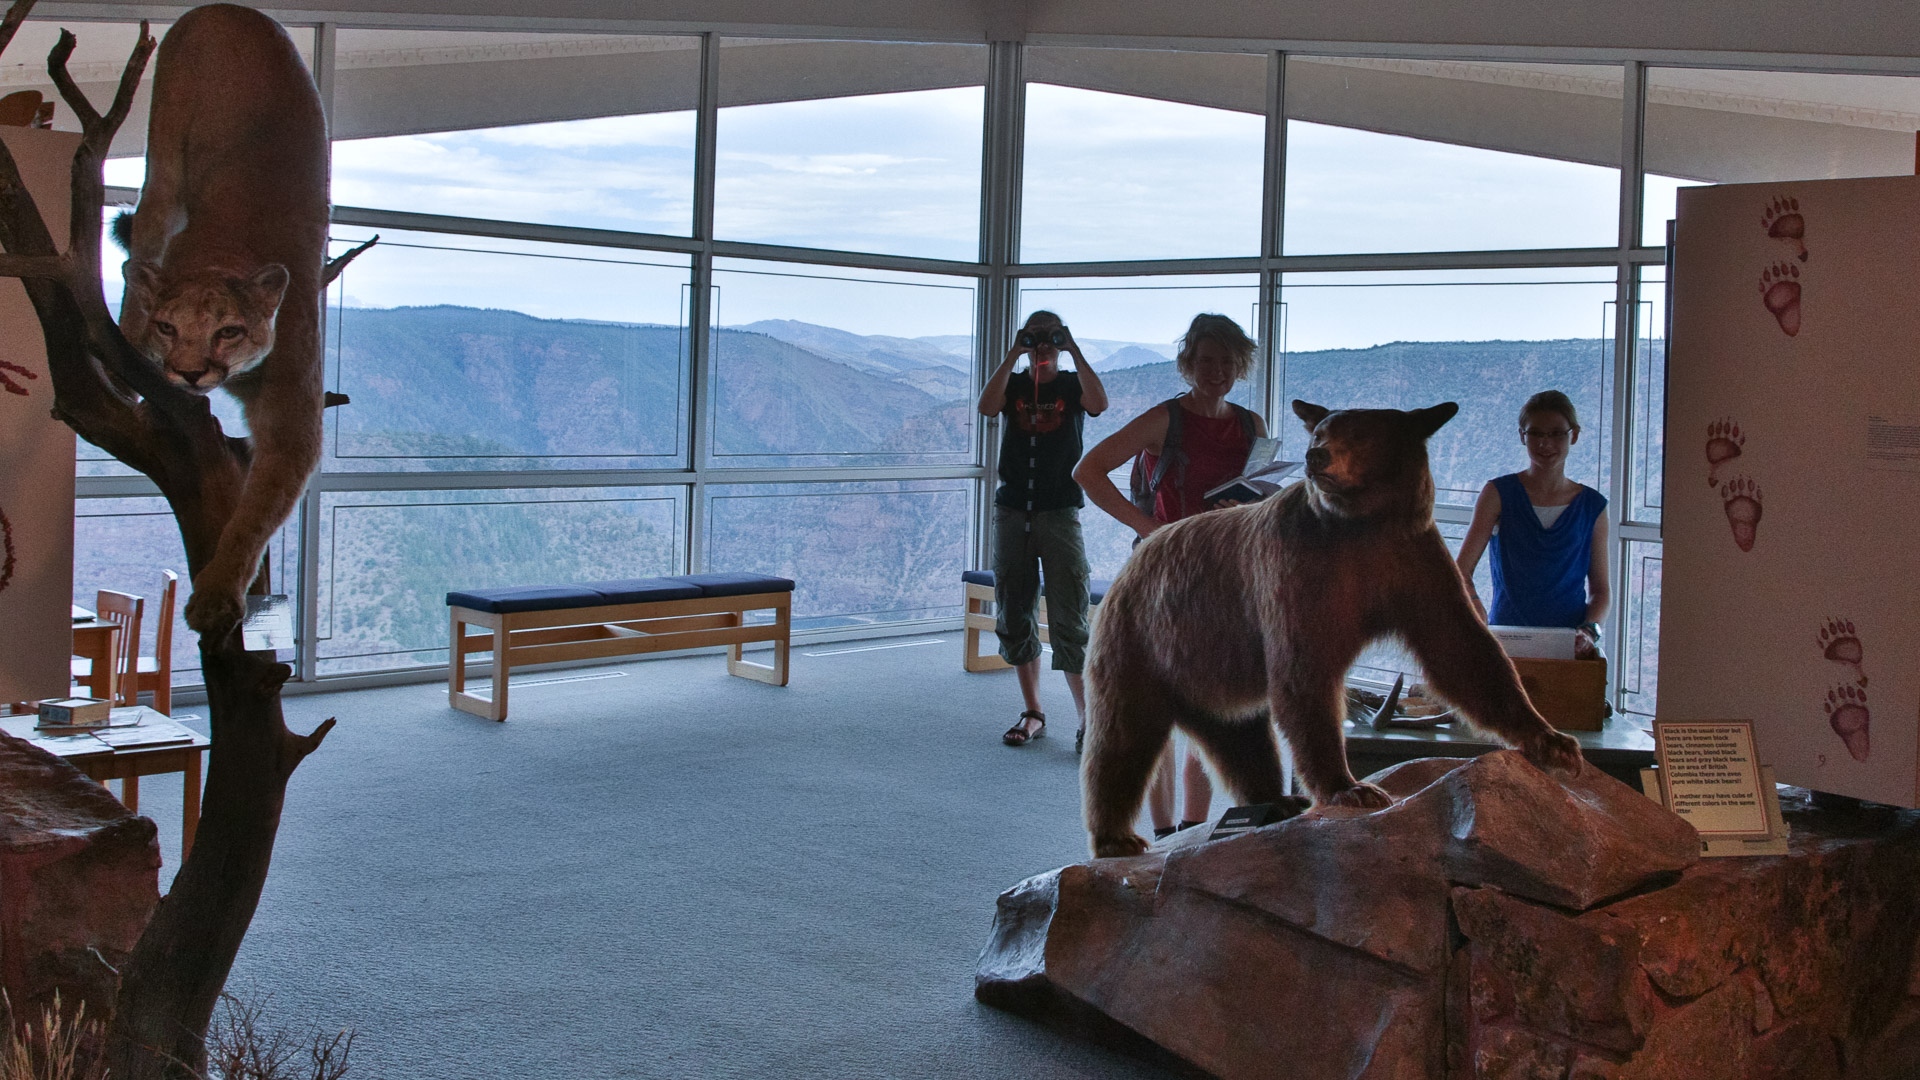 24.7. Flaming Gorge - Visitor Center